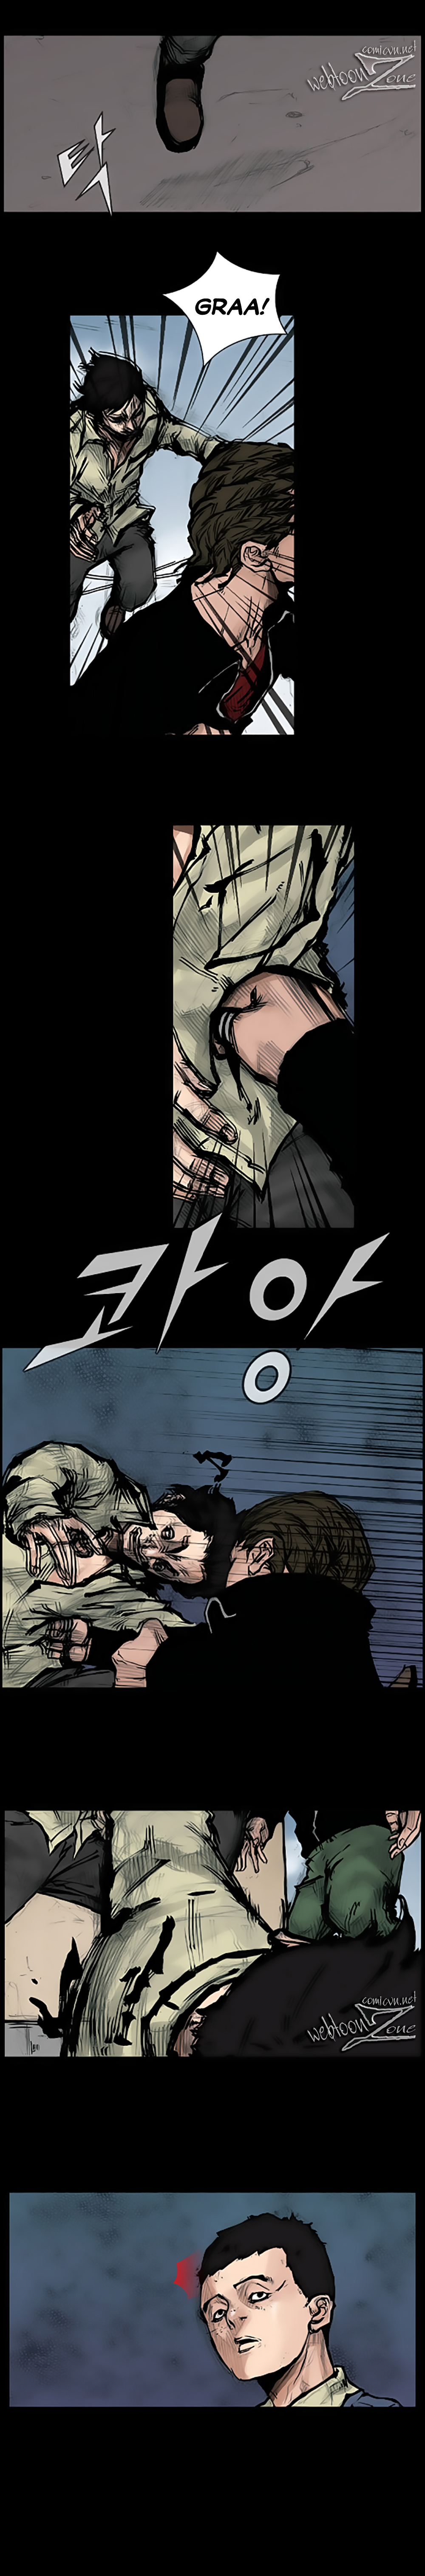 Dokgo Rewind kỳ 2 trang 8